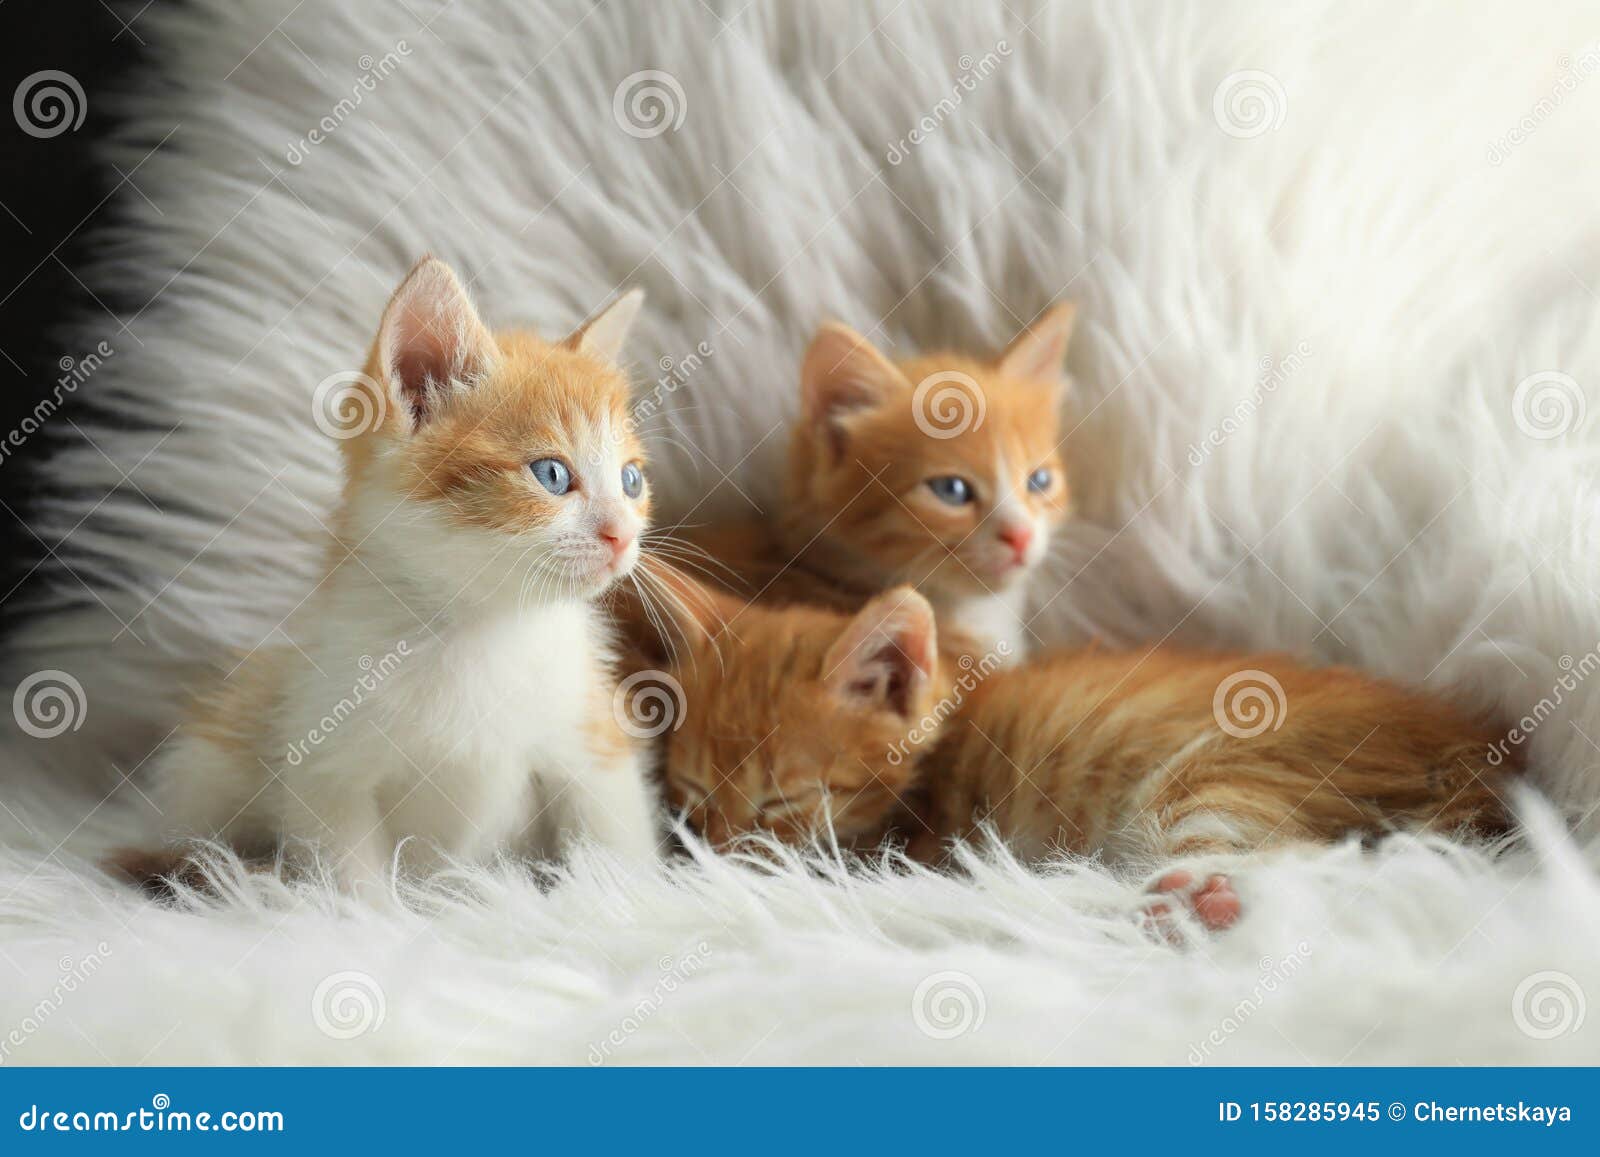 Cute Little Kittens on White Furry Blanket Stock Image - Image of ...